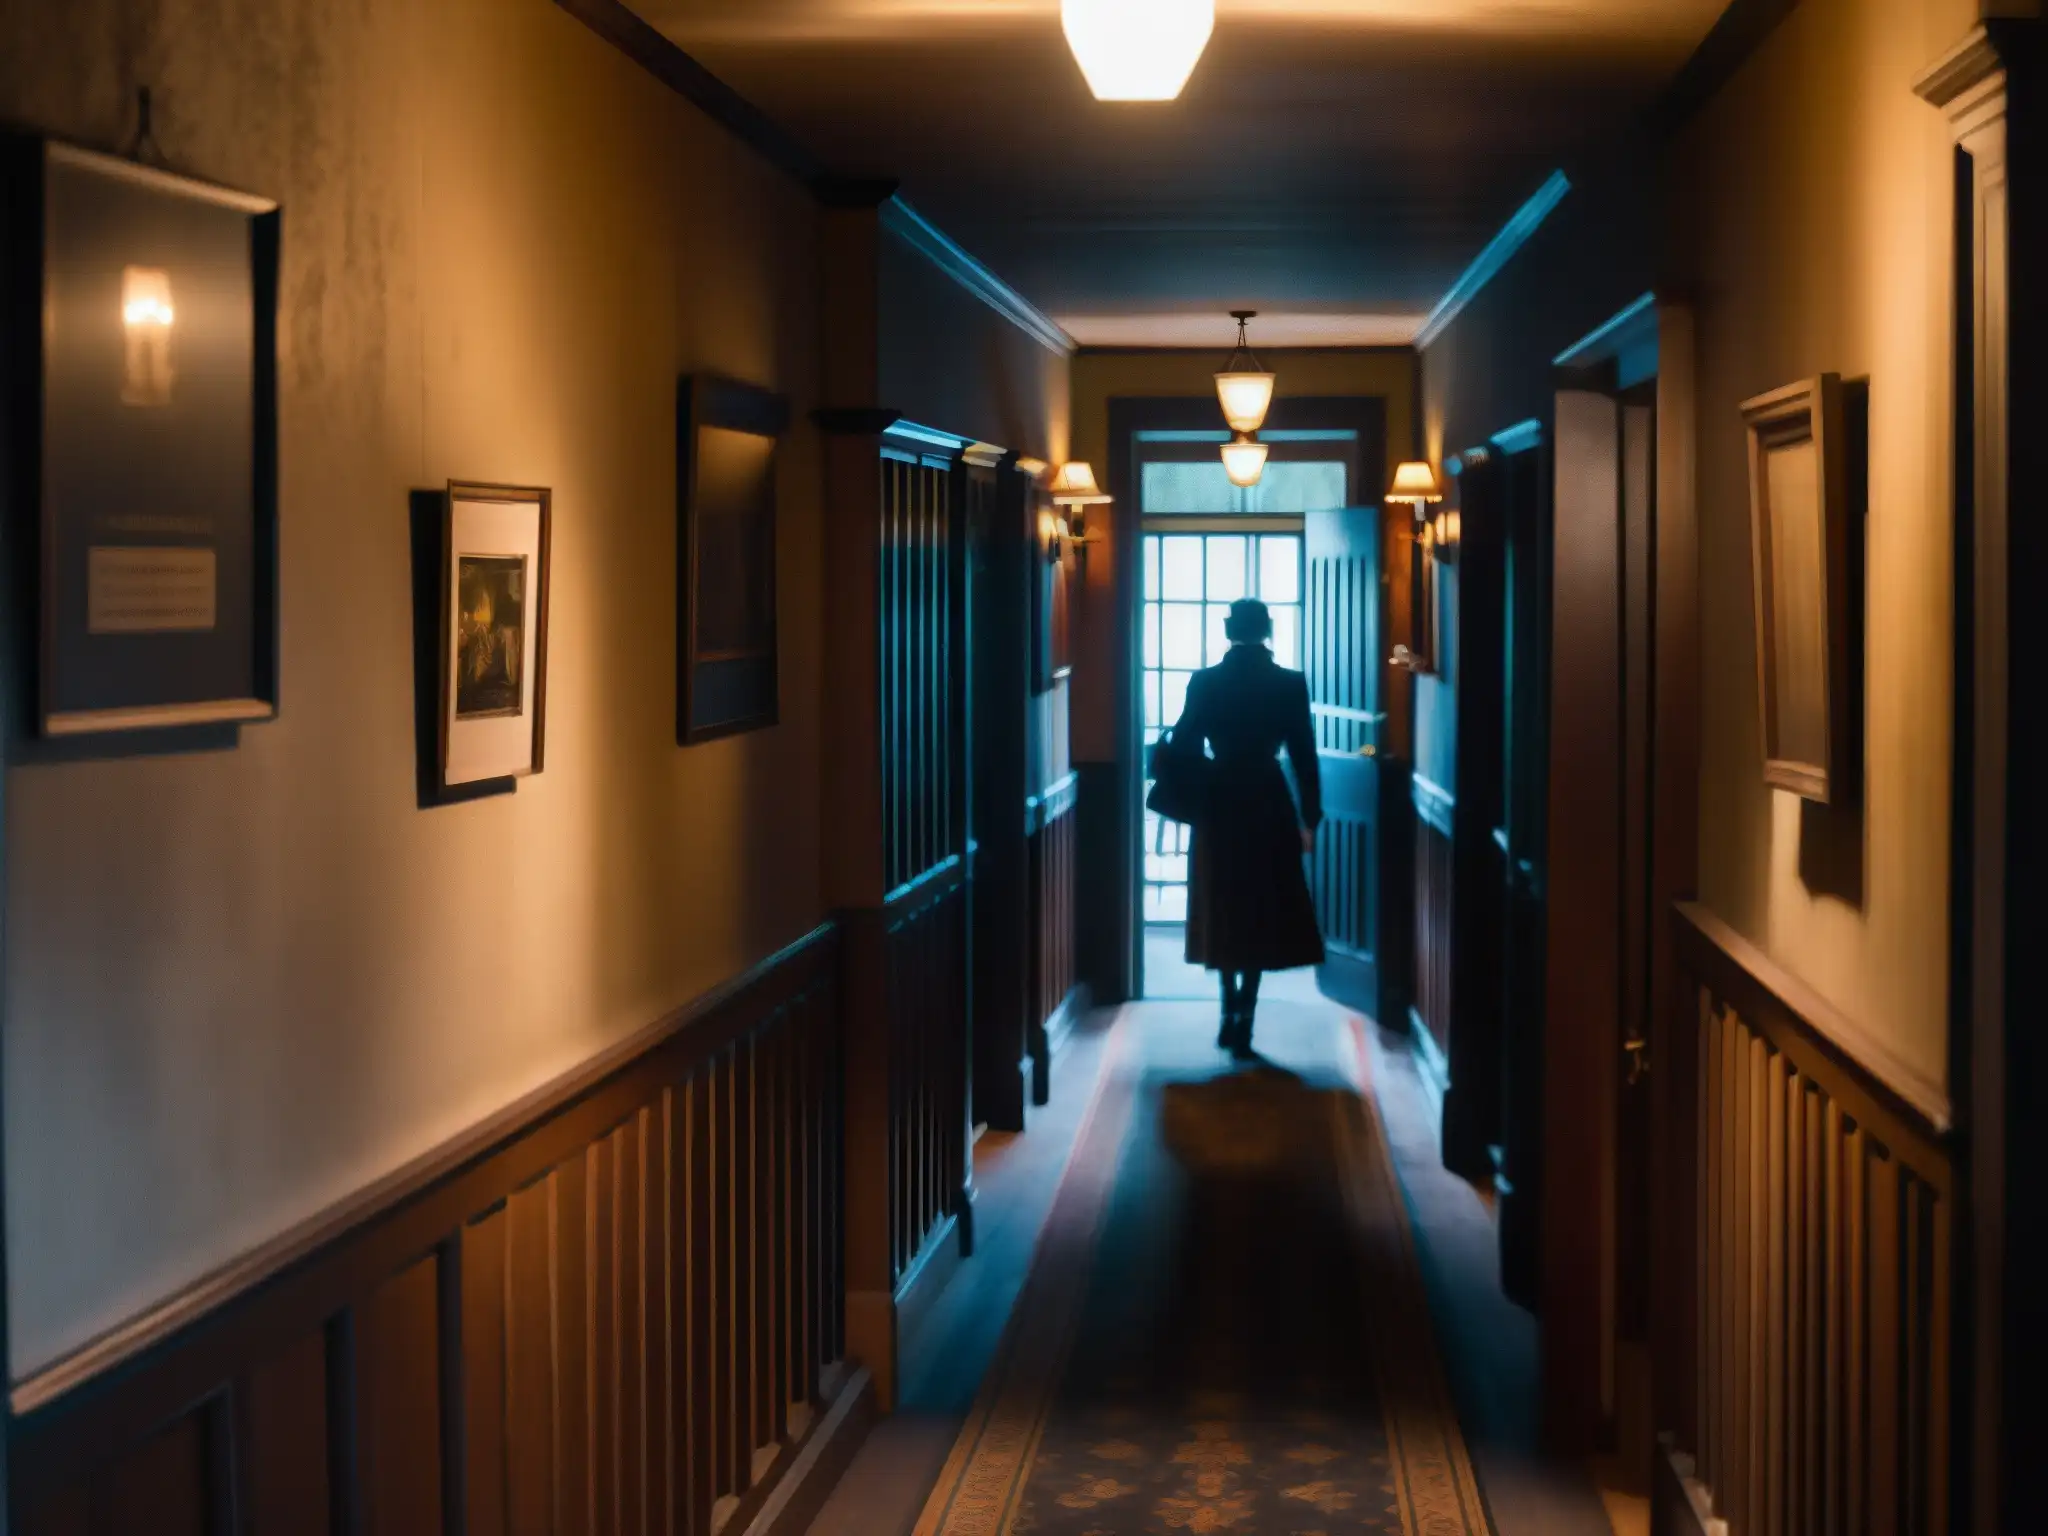 Corredor misterioso de Victoria's Black Swan Inn, con figura oscura, evocando la leyenda figura negra de la posada